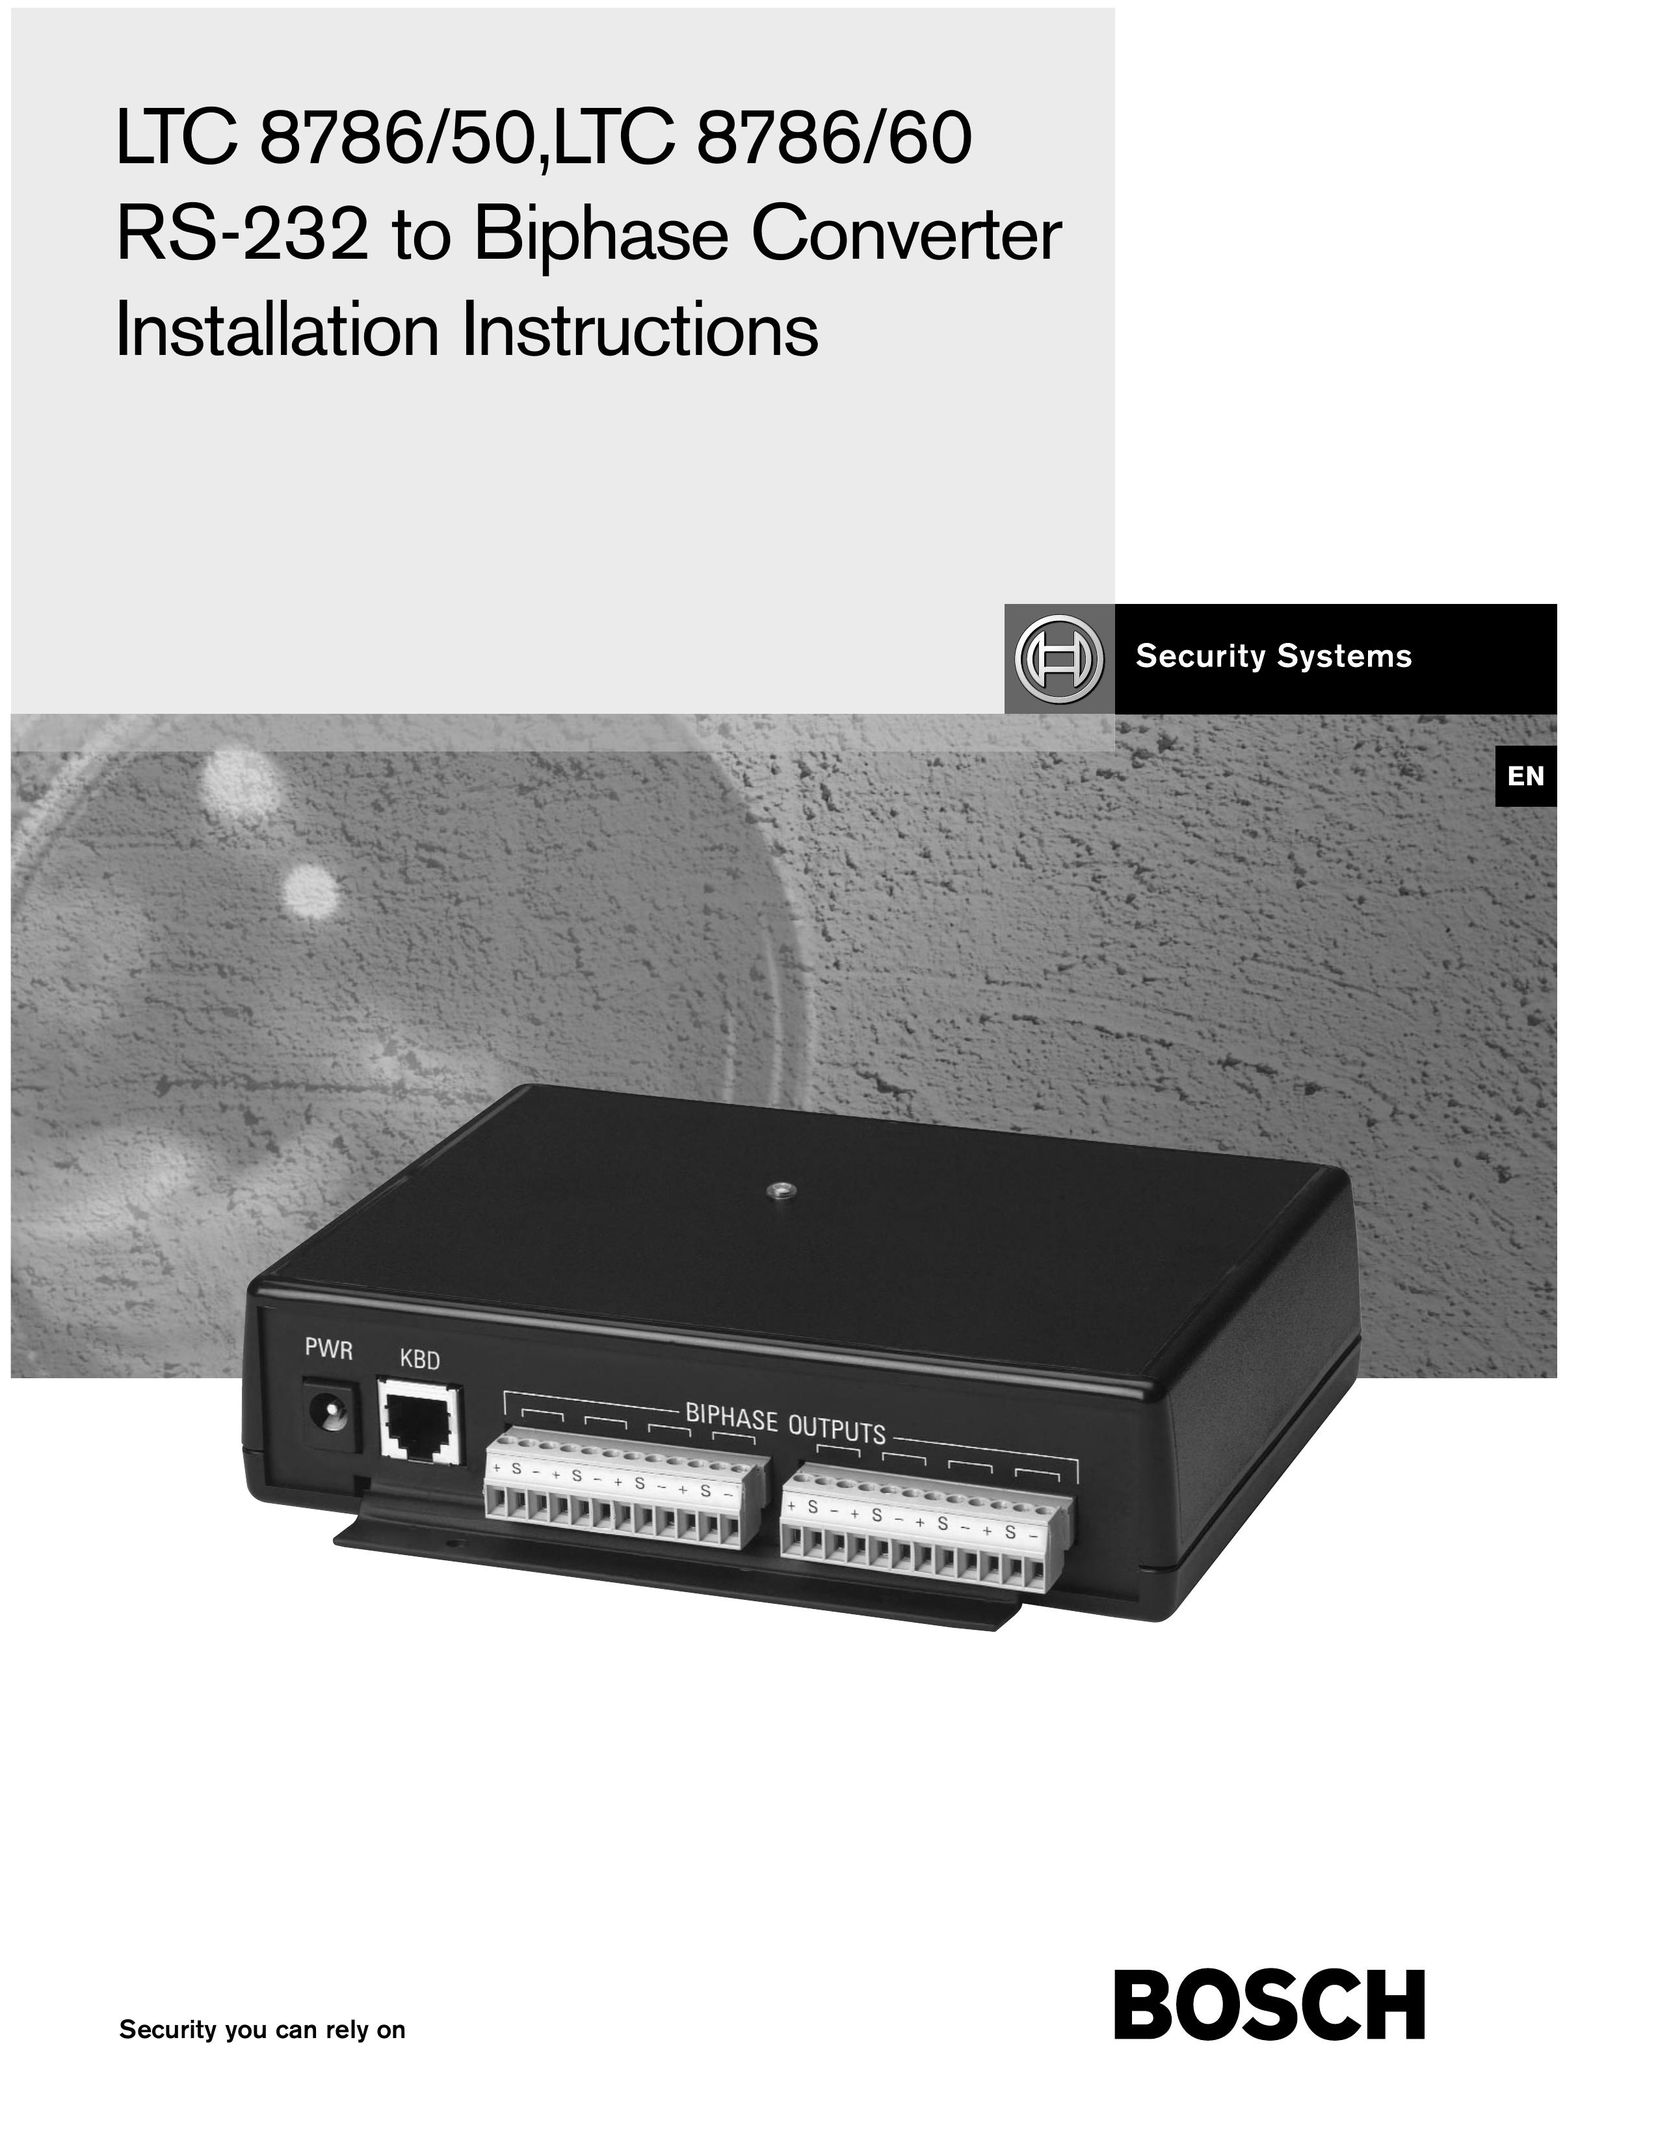 Bosch Appliances LTC8786/60 TV Converter Box User Manual